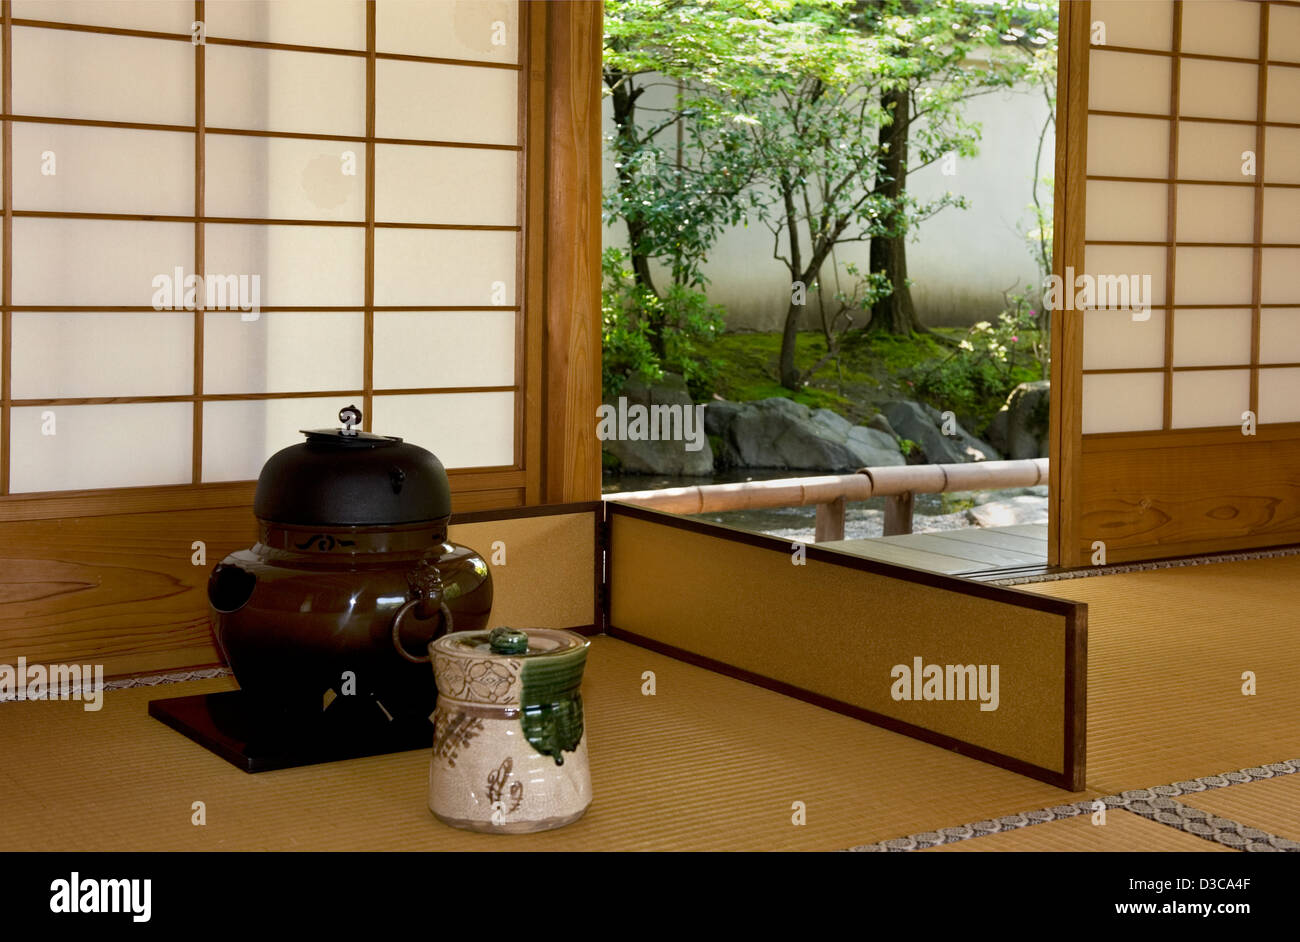 Tatami mats and paper sliding doors called Shoji room japanese z Stock  Photo by ©Minny0012011@gmail.com 286376148